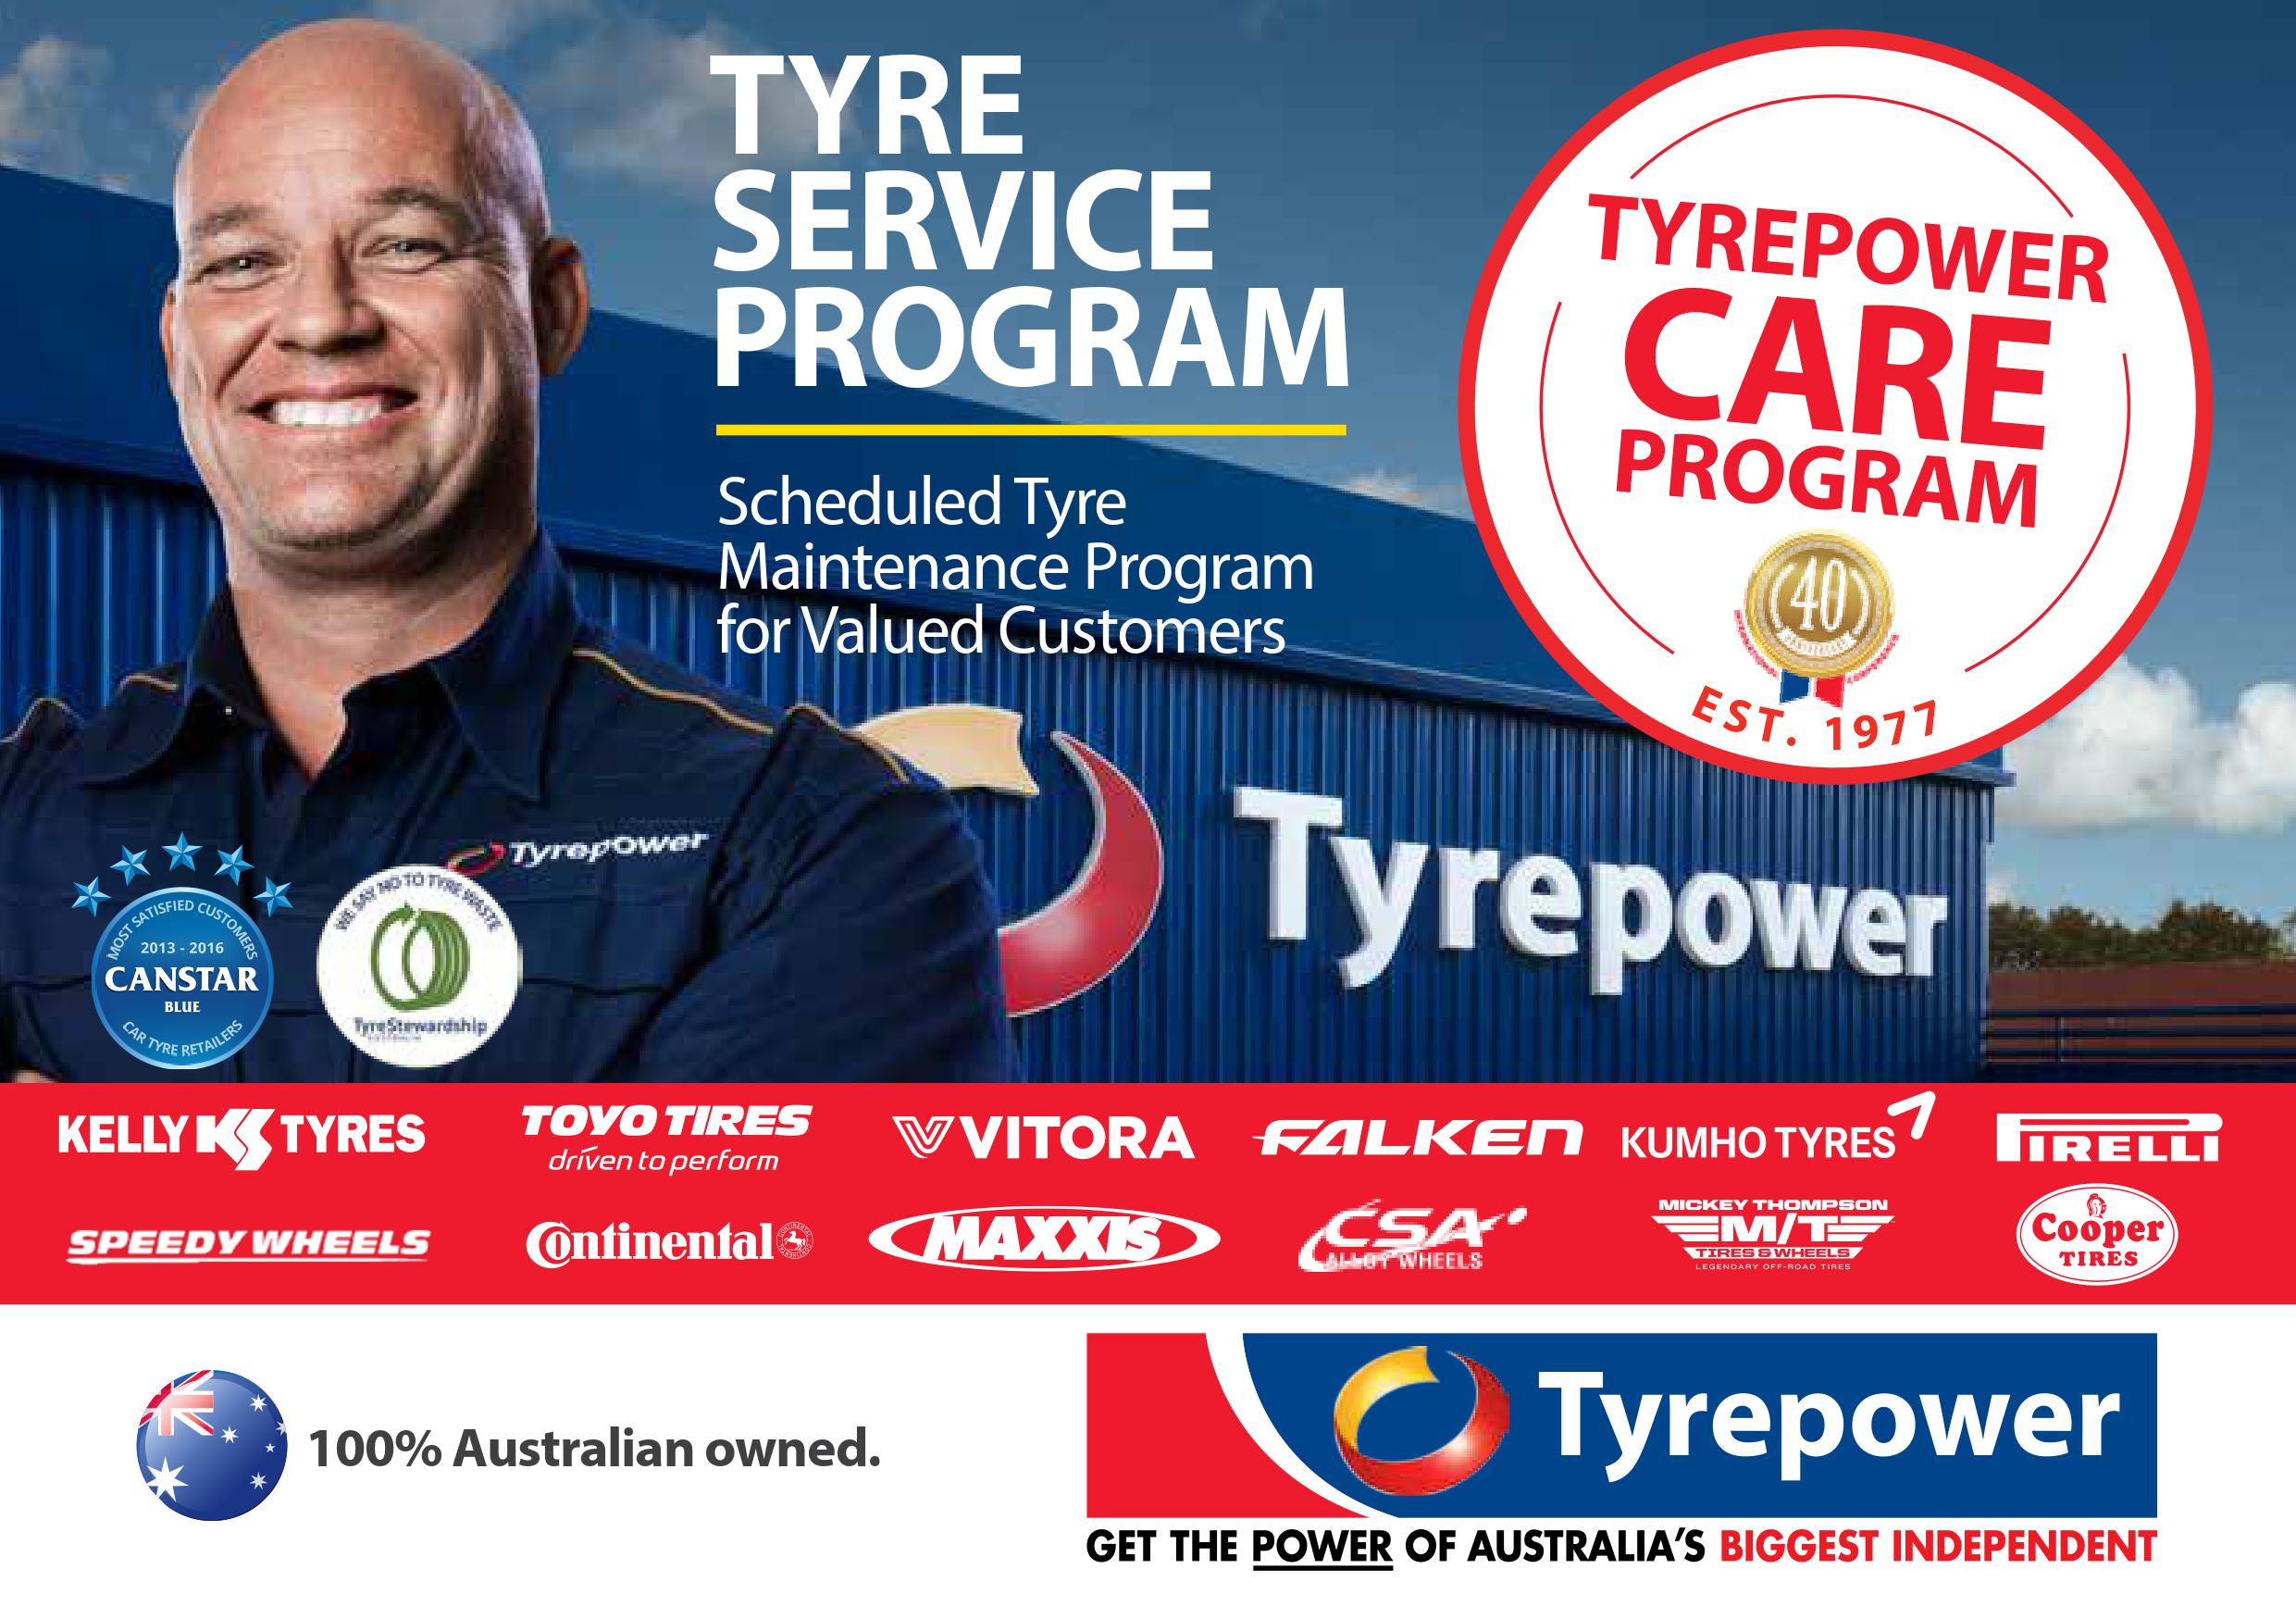 Tyrepower Care Programme